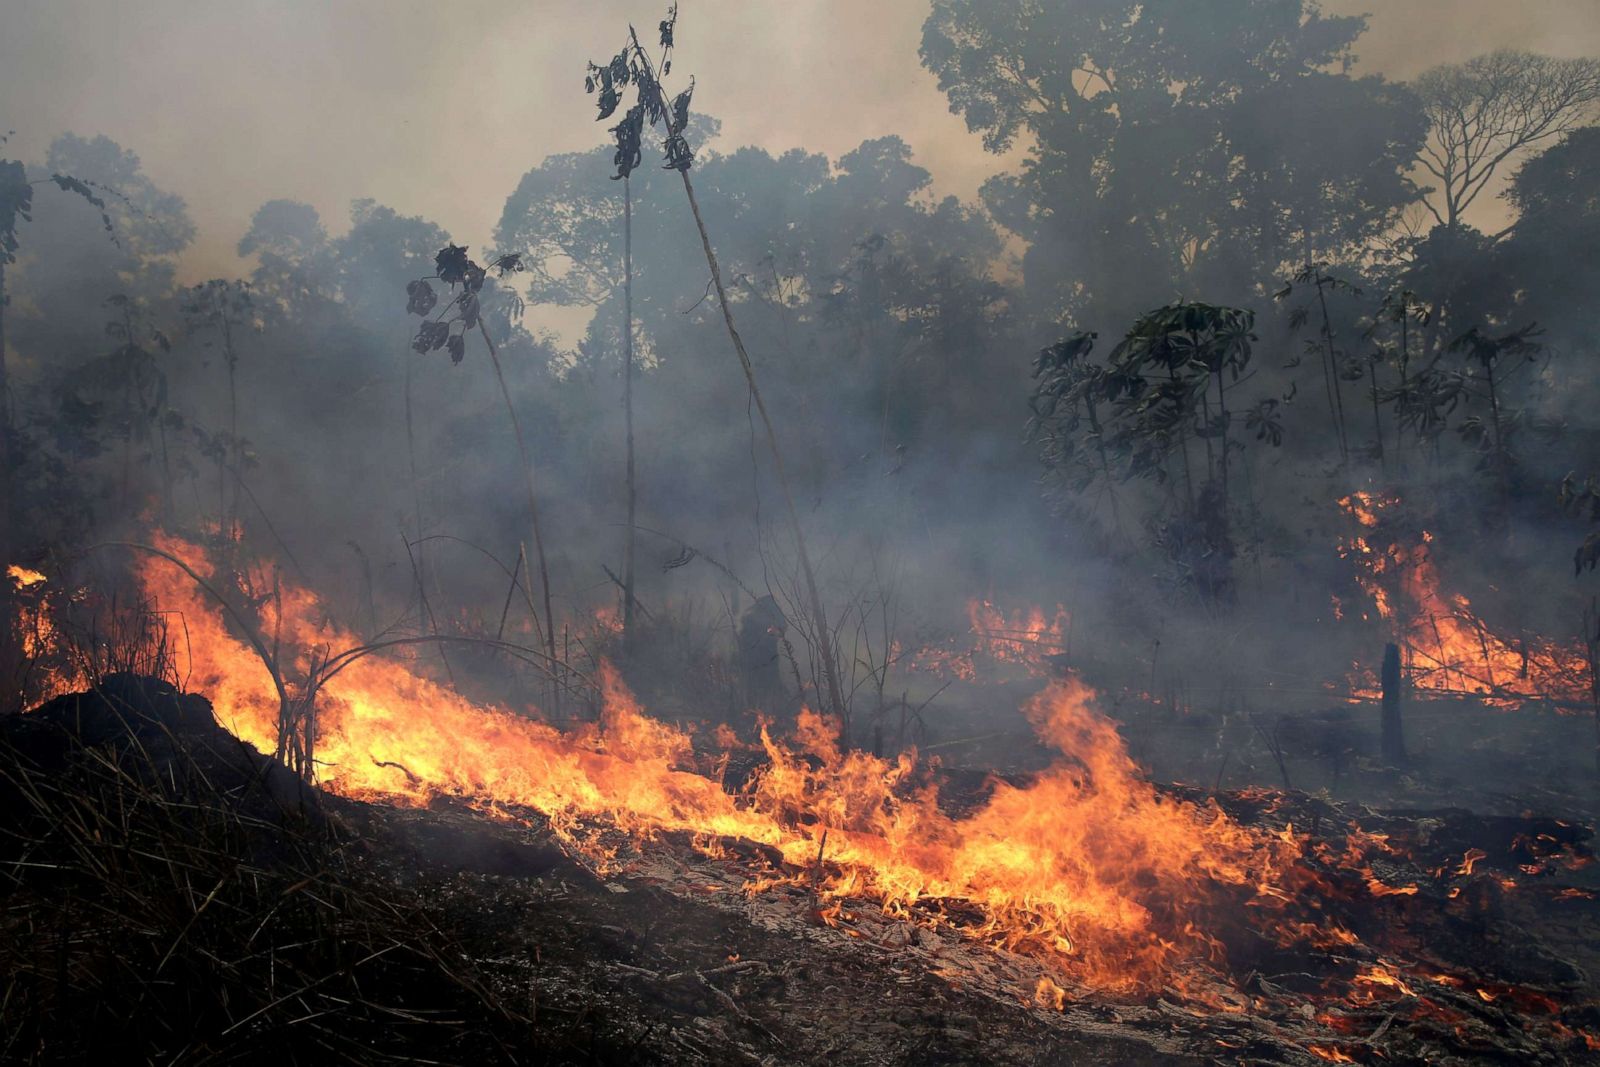 PHOTOS: The burning Amazon rainforest Photos | Image #51 - ABC News